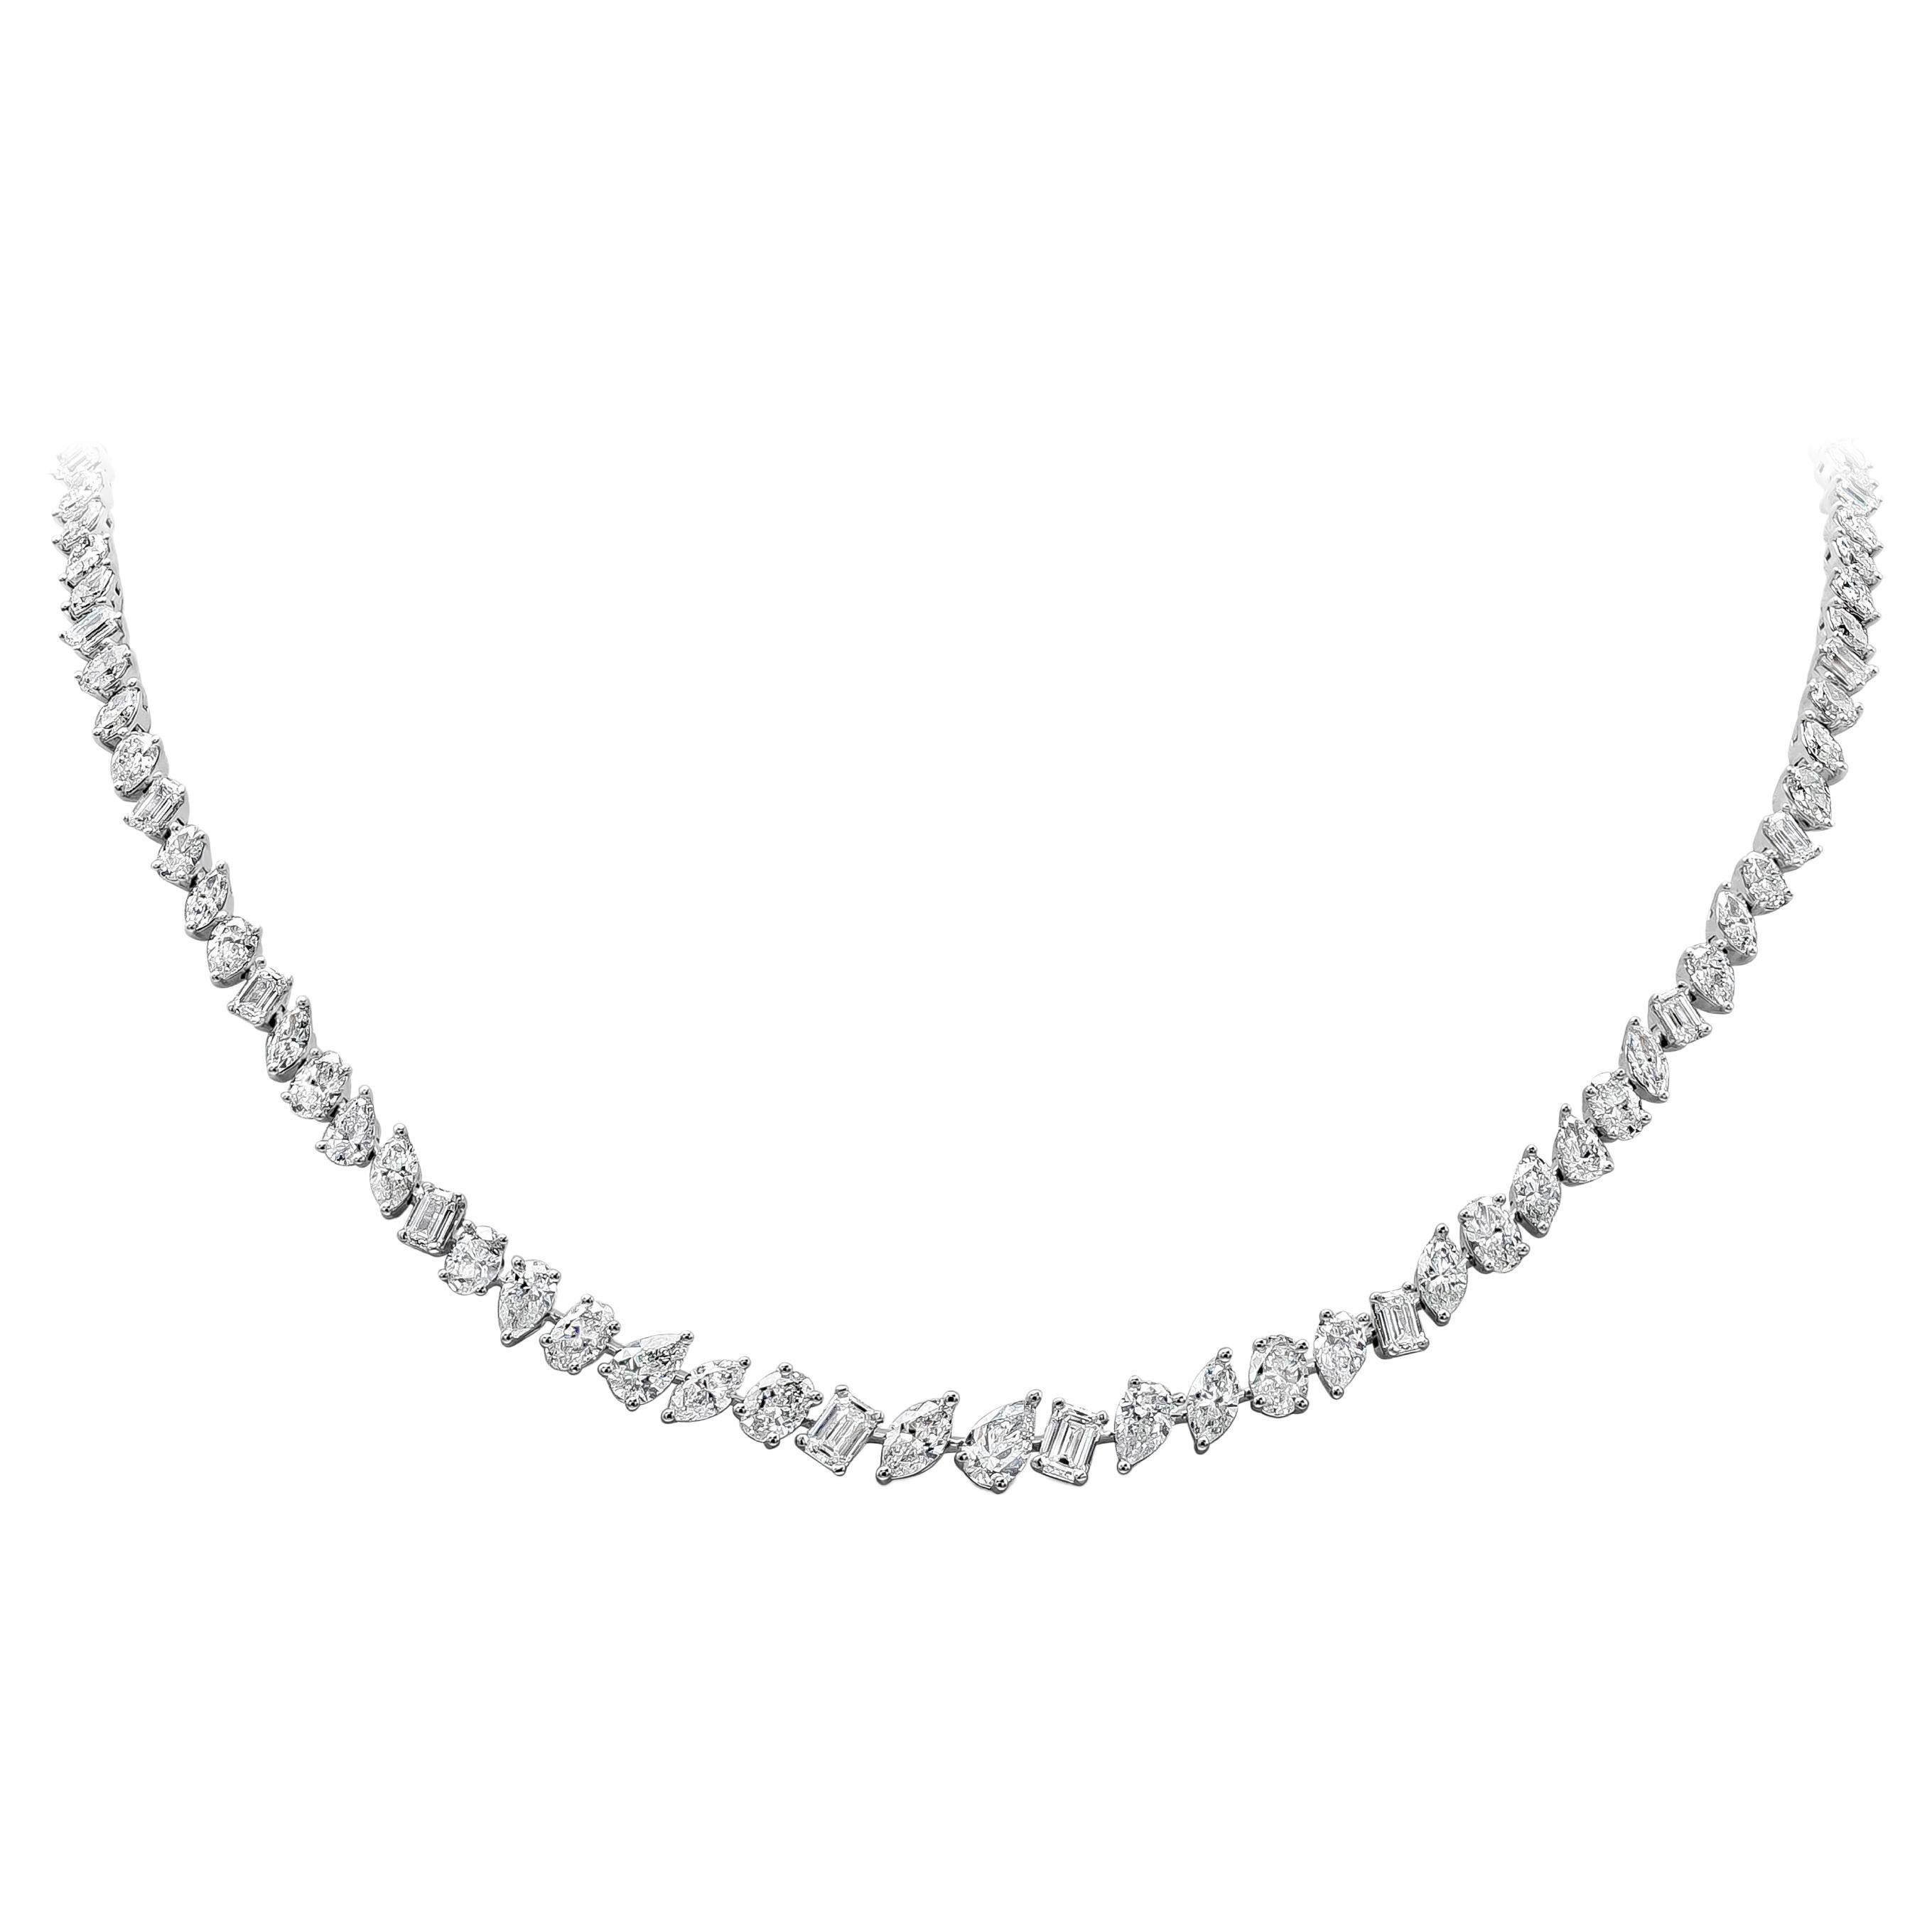 Roman Malakov 19.38 Carats Total Fancy Shape Mixed Cut Diamond Riviere Necklace